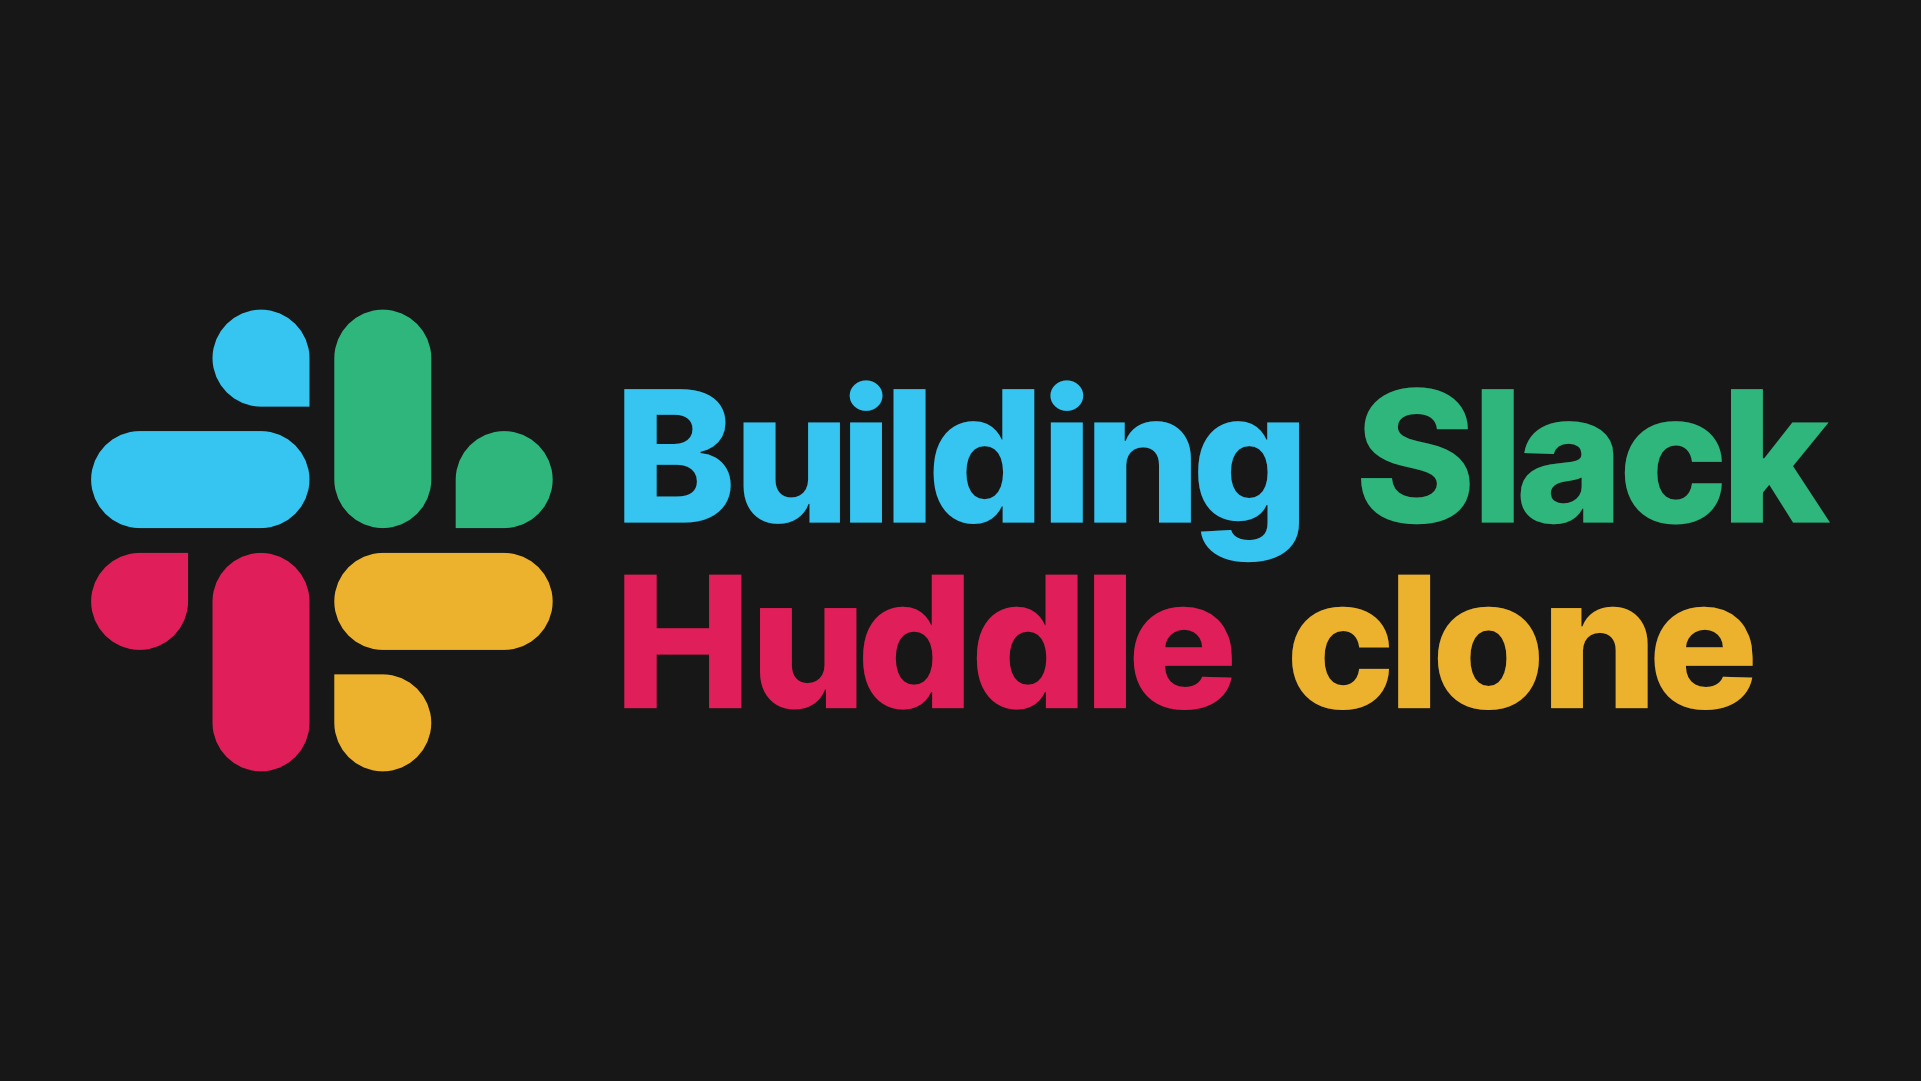 Slack Huddle Clone Cover Image.png